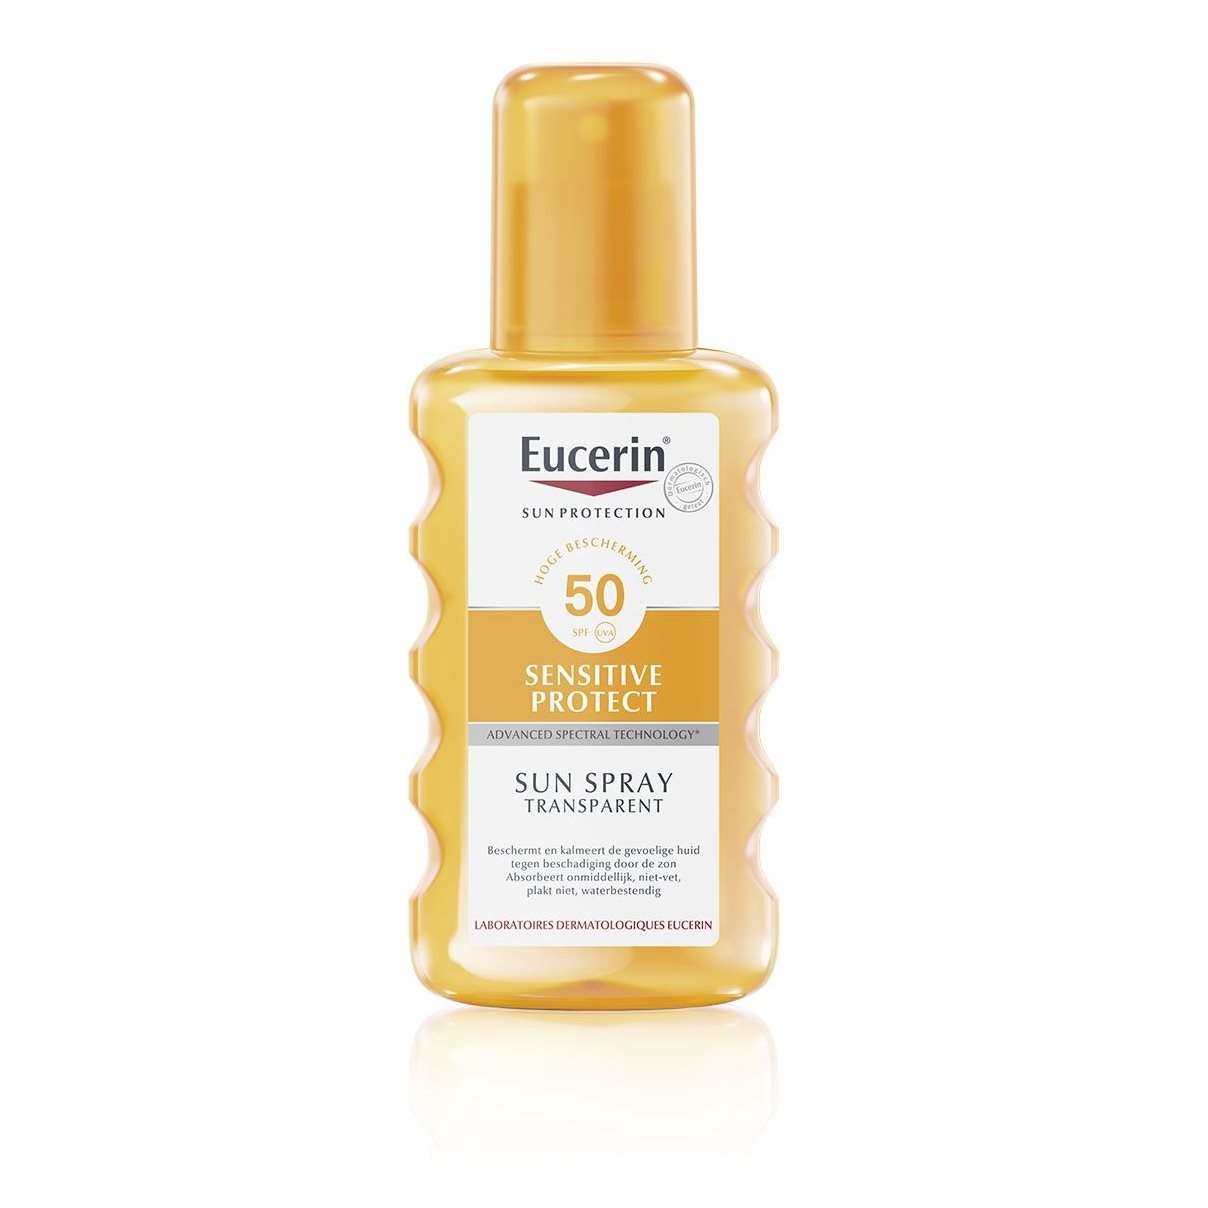 Eucerin Sensitive Protect Sun Spray Transparent SPF 50